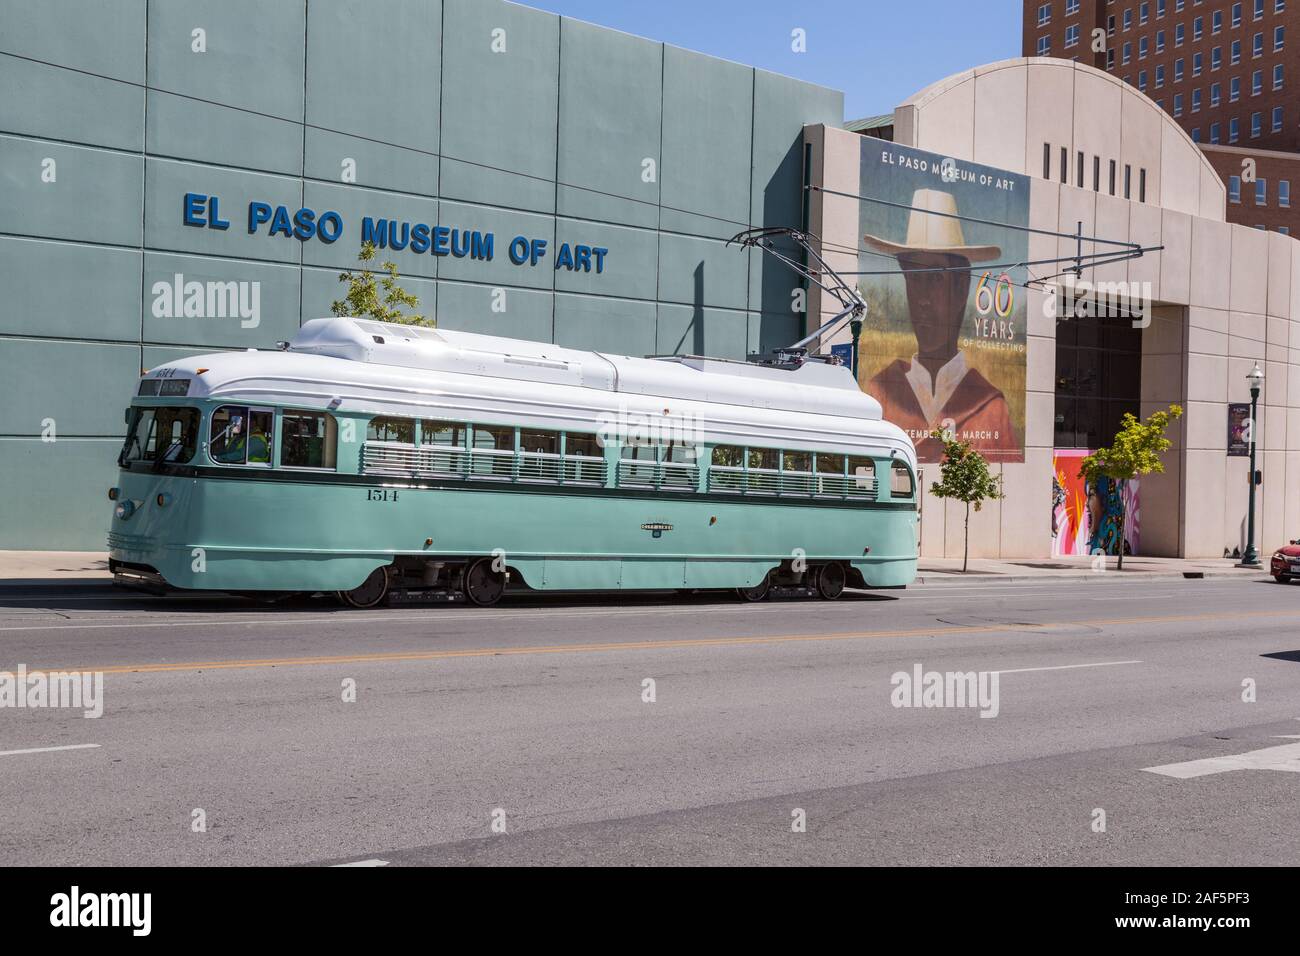 El Paso, Texas.  El Paso Museum of Art and Street Car. Stock Photo